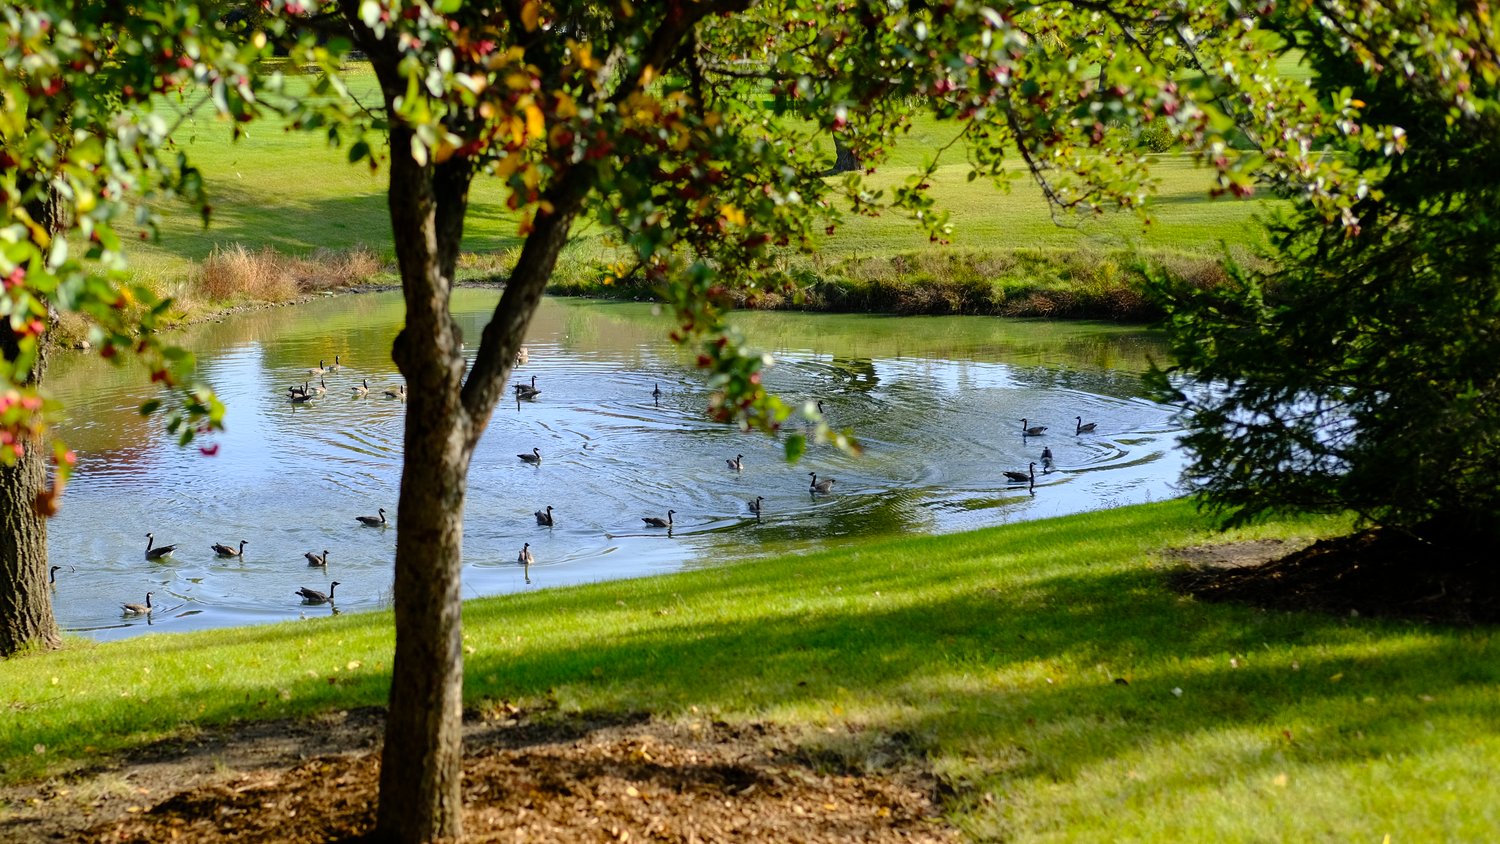 Geese enjoying the pond.